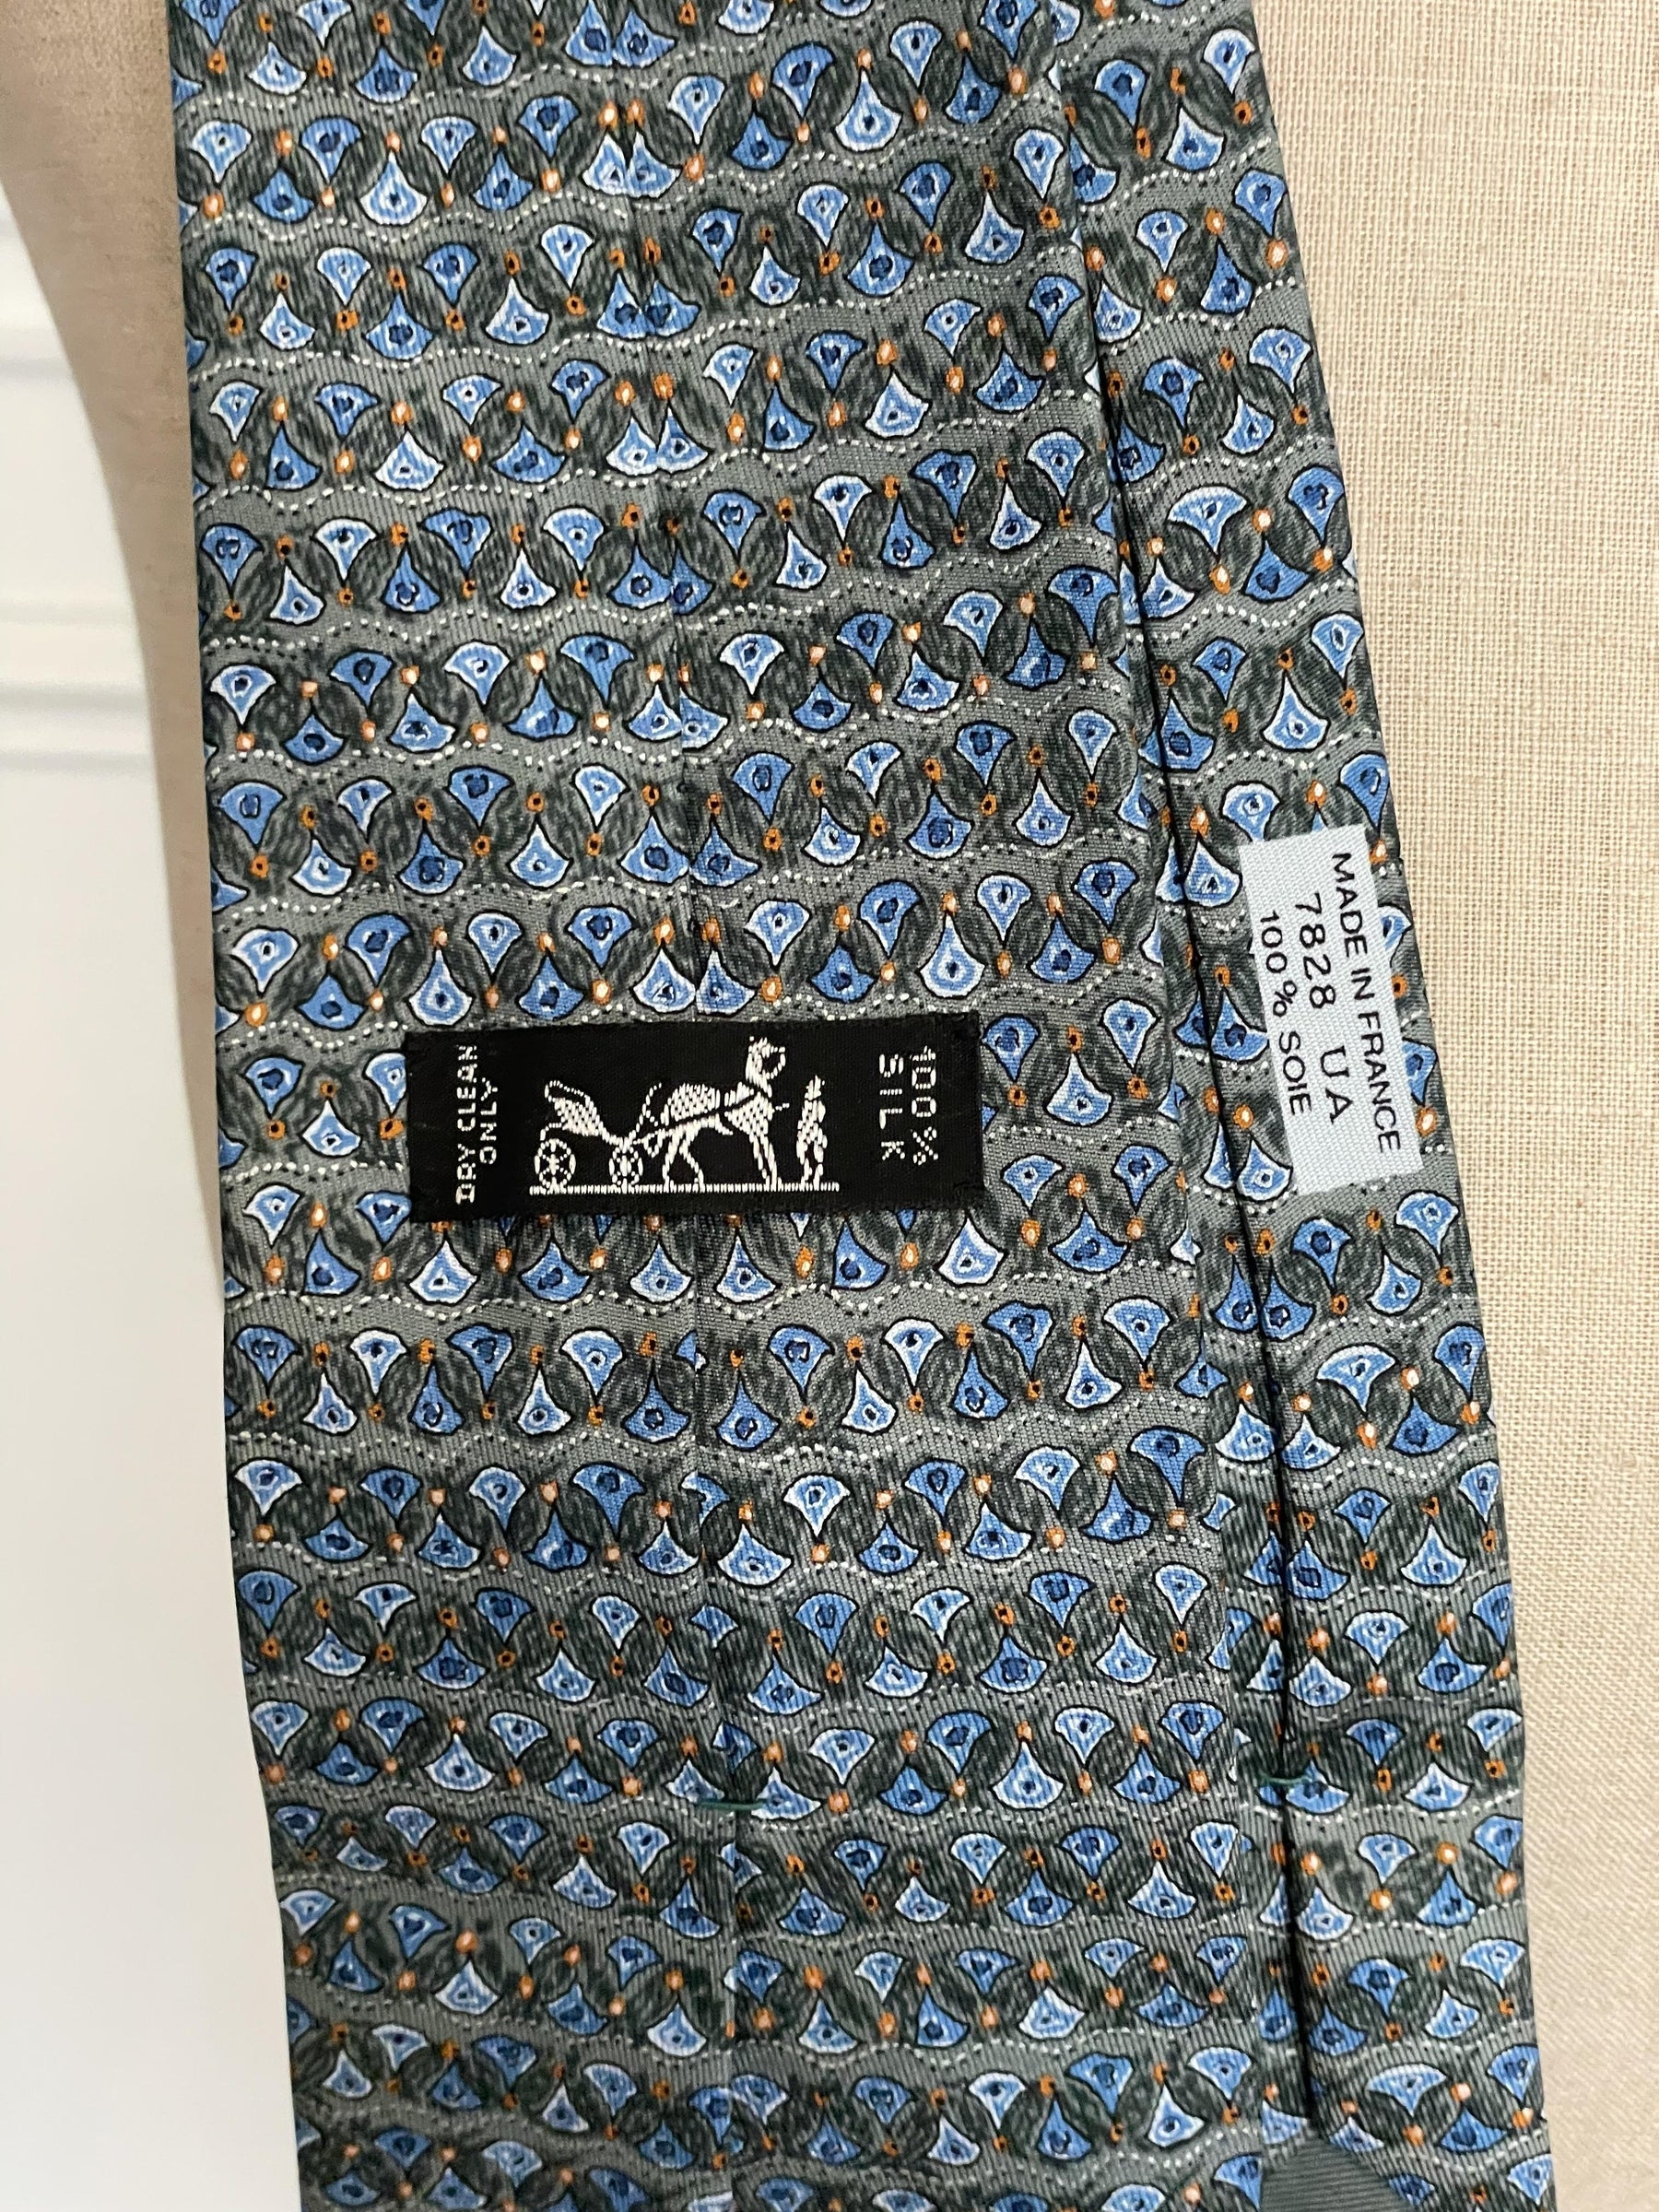 Cravate Hermès  Gris